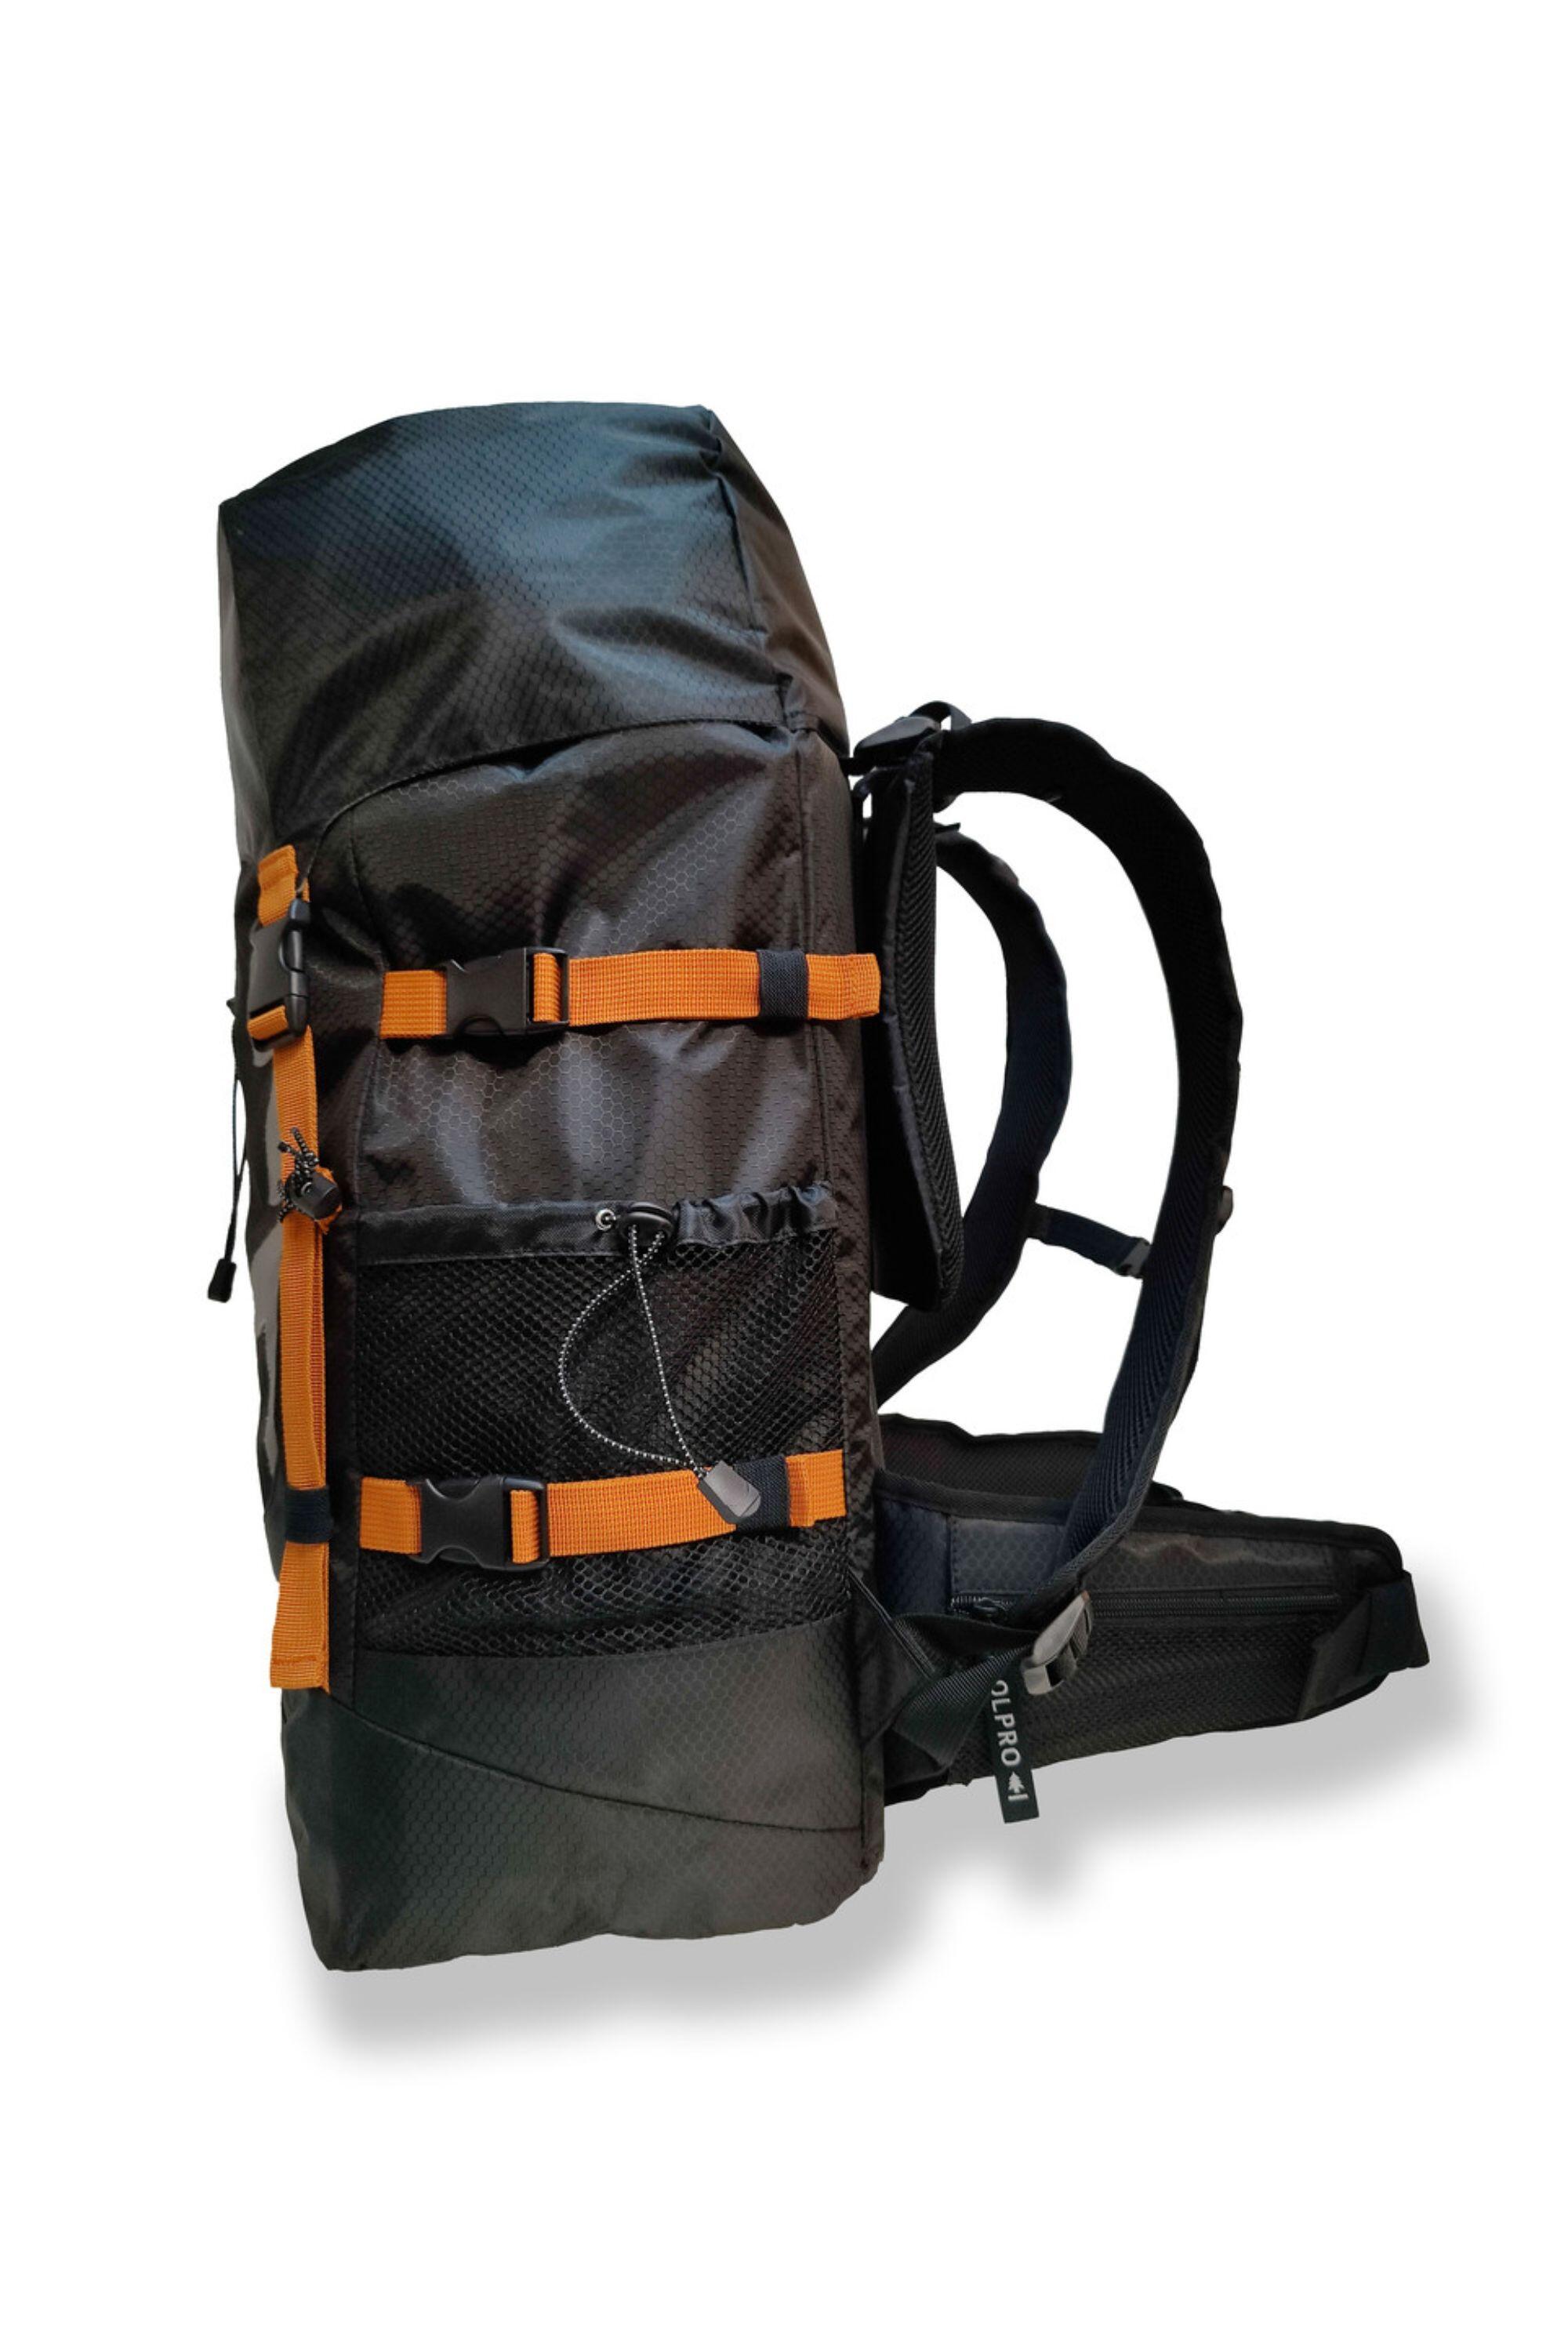 OLPRO 40L Rucksack Bag Black 4/4